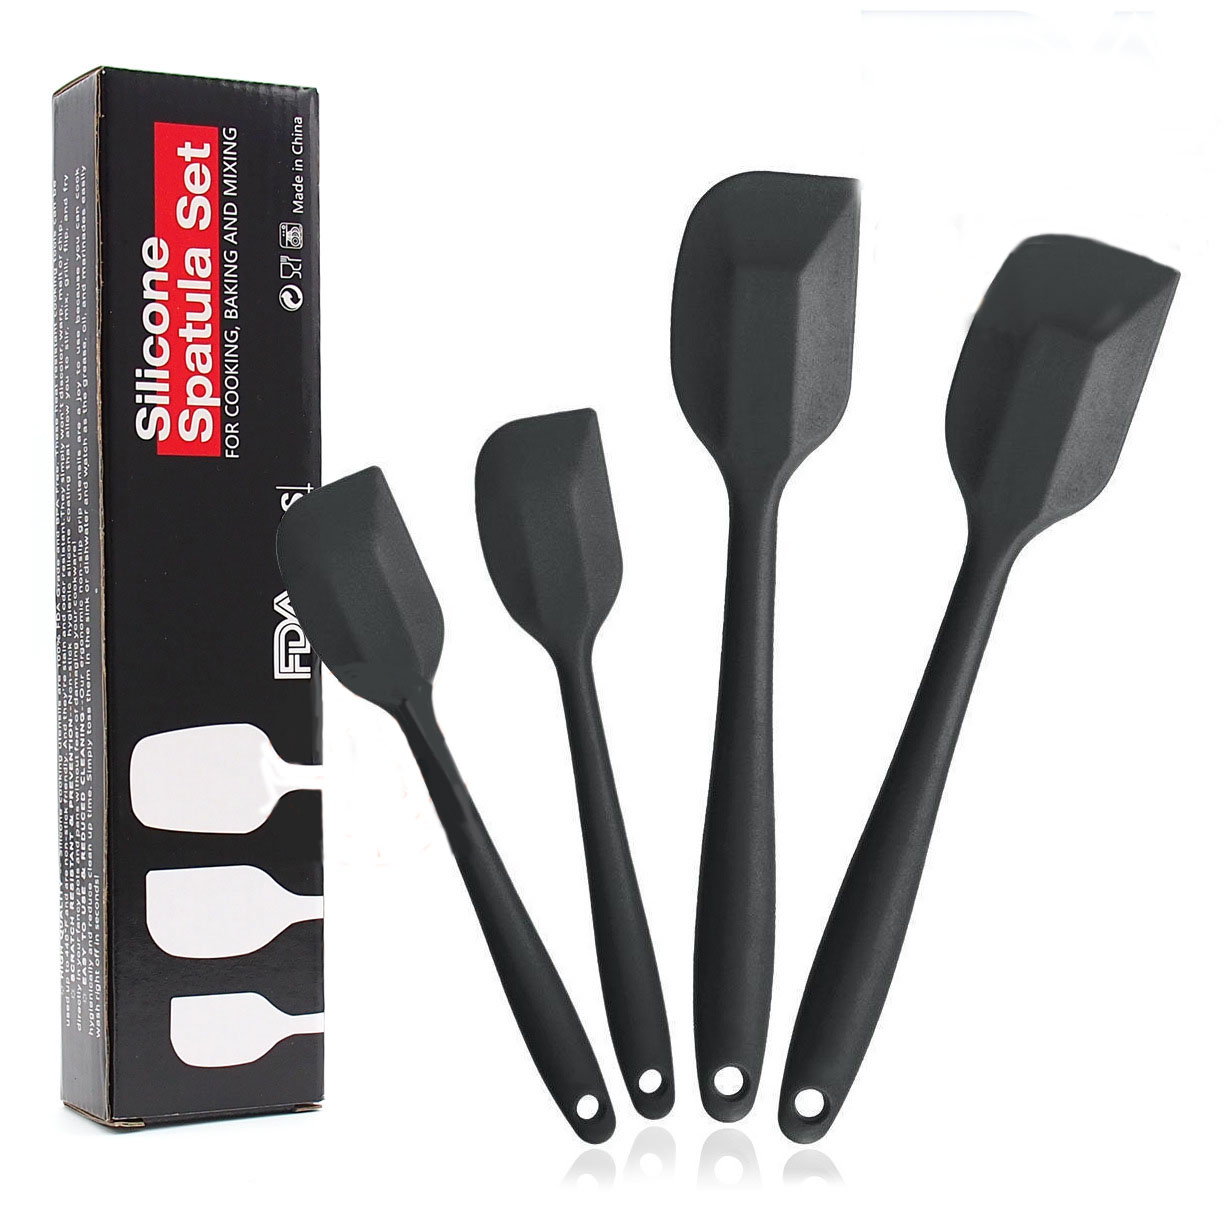 Cooking tools kitchen utensils safe set 4 Pieces heat resistant non-stick rubber silicone spatula set